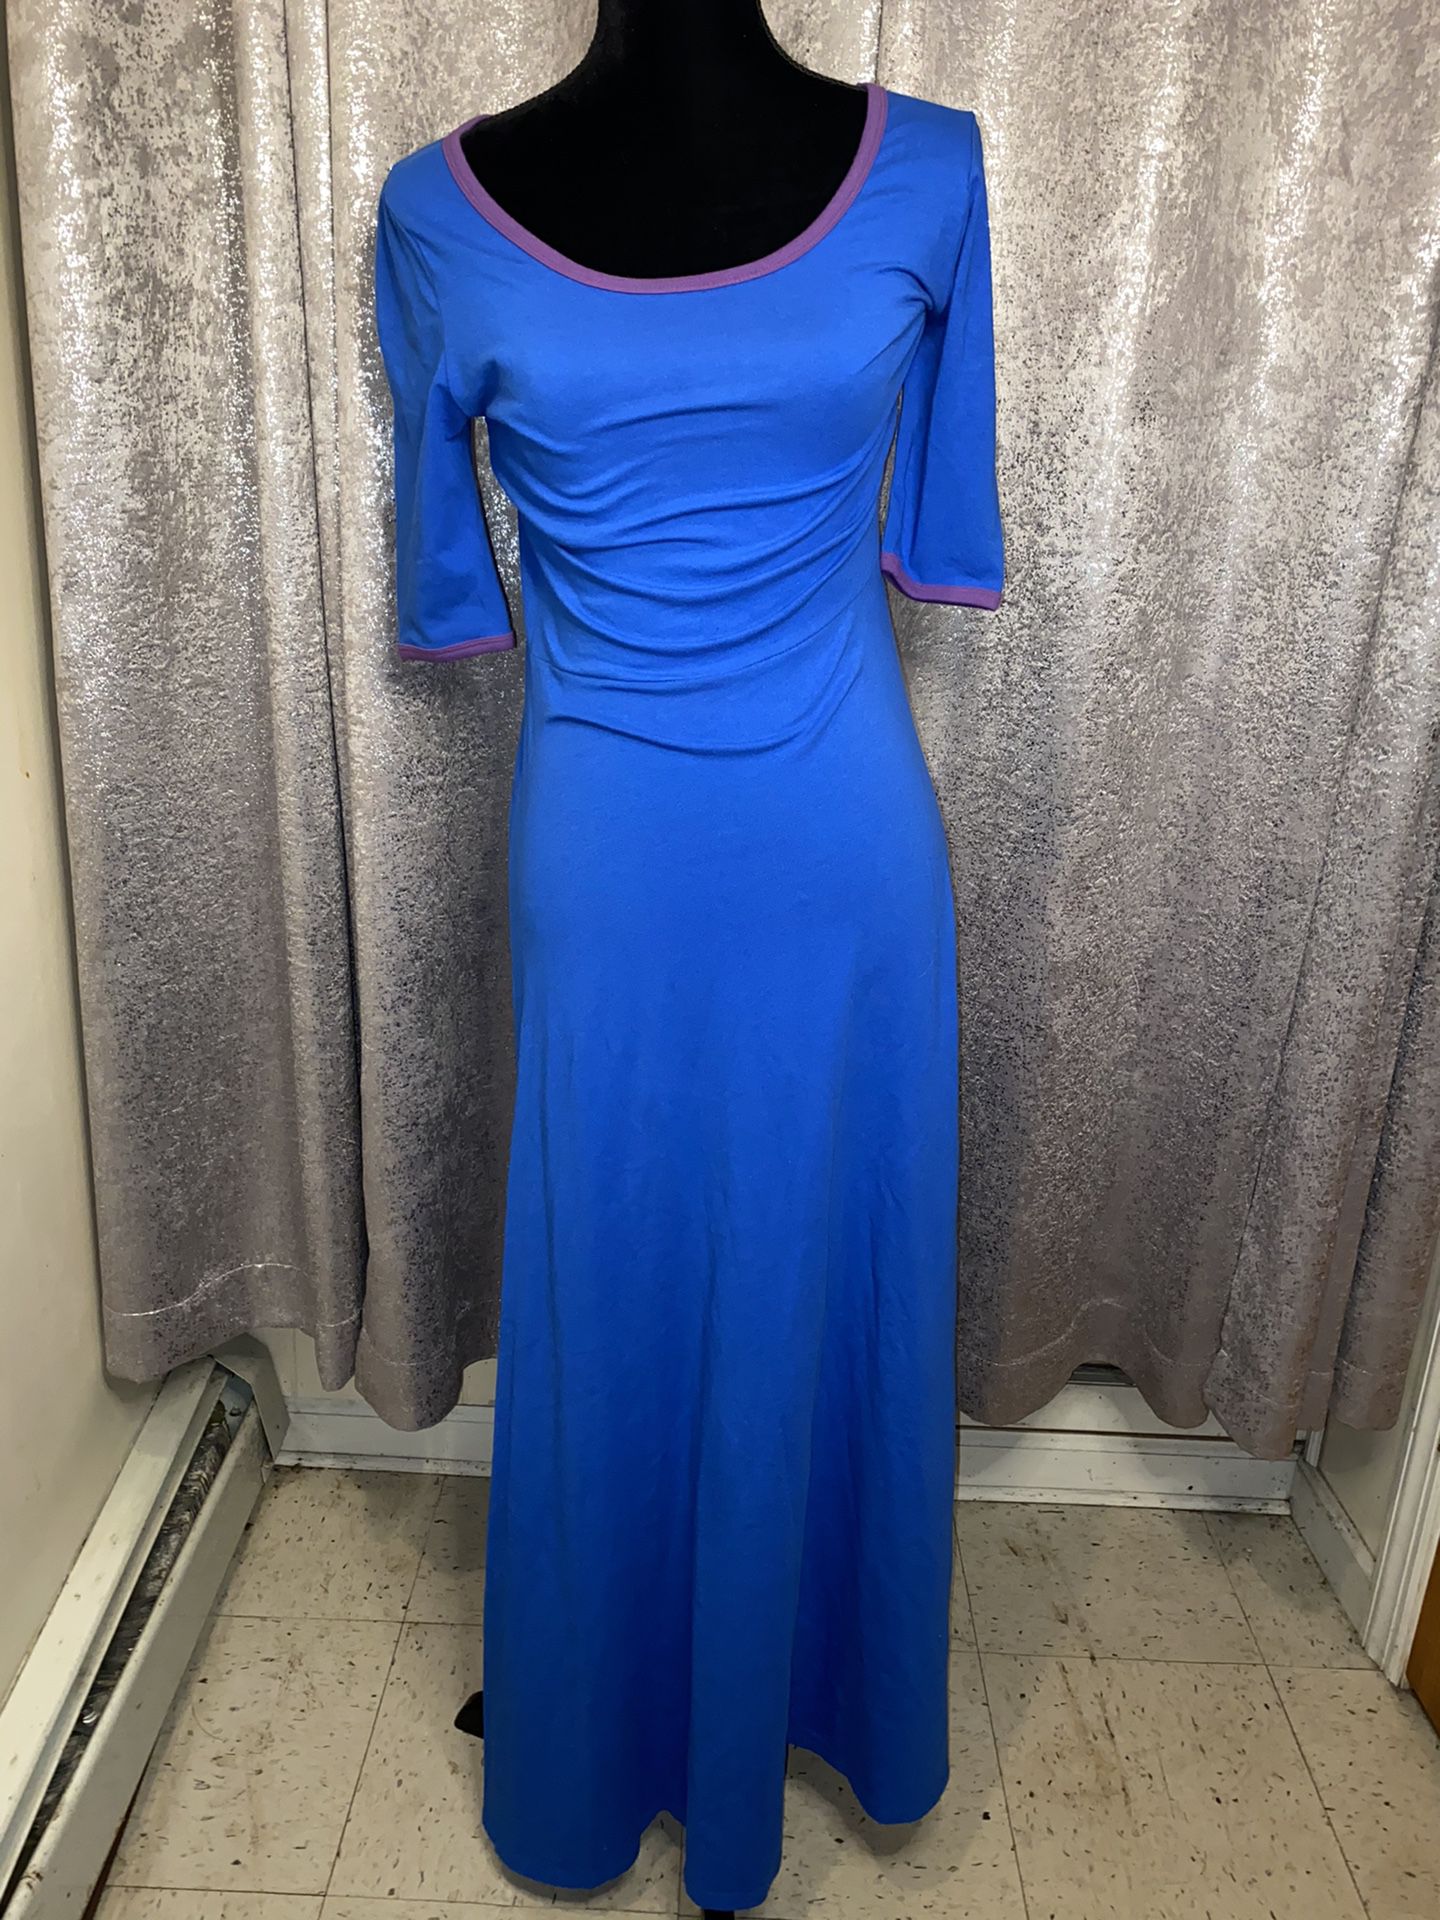 Blue & Purple LuLaRoe Dress